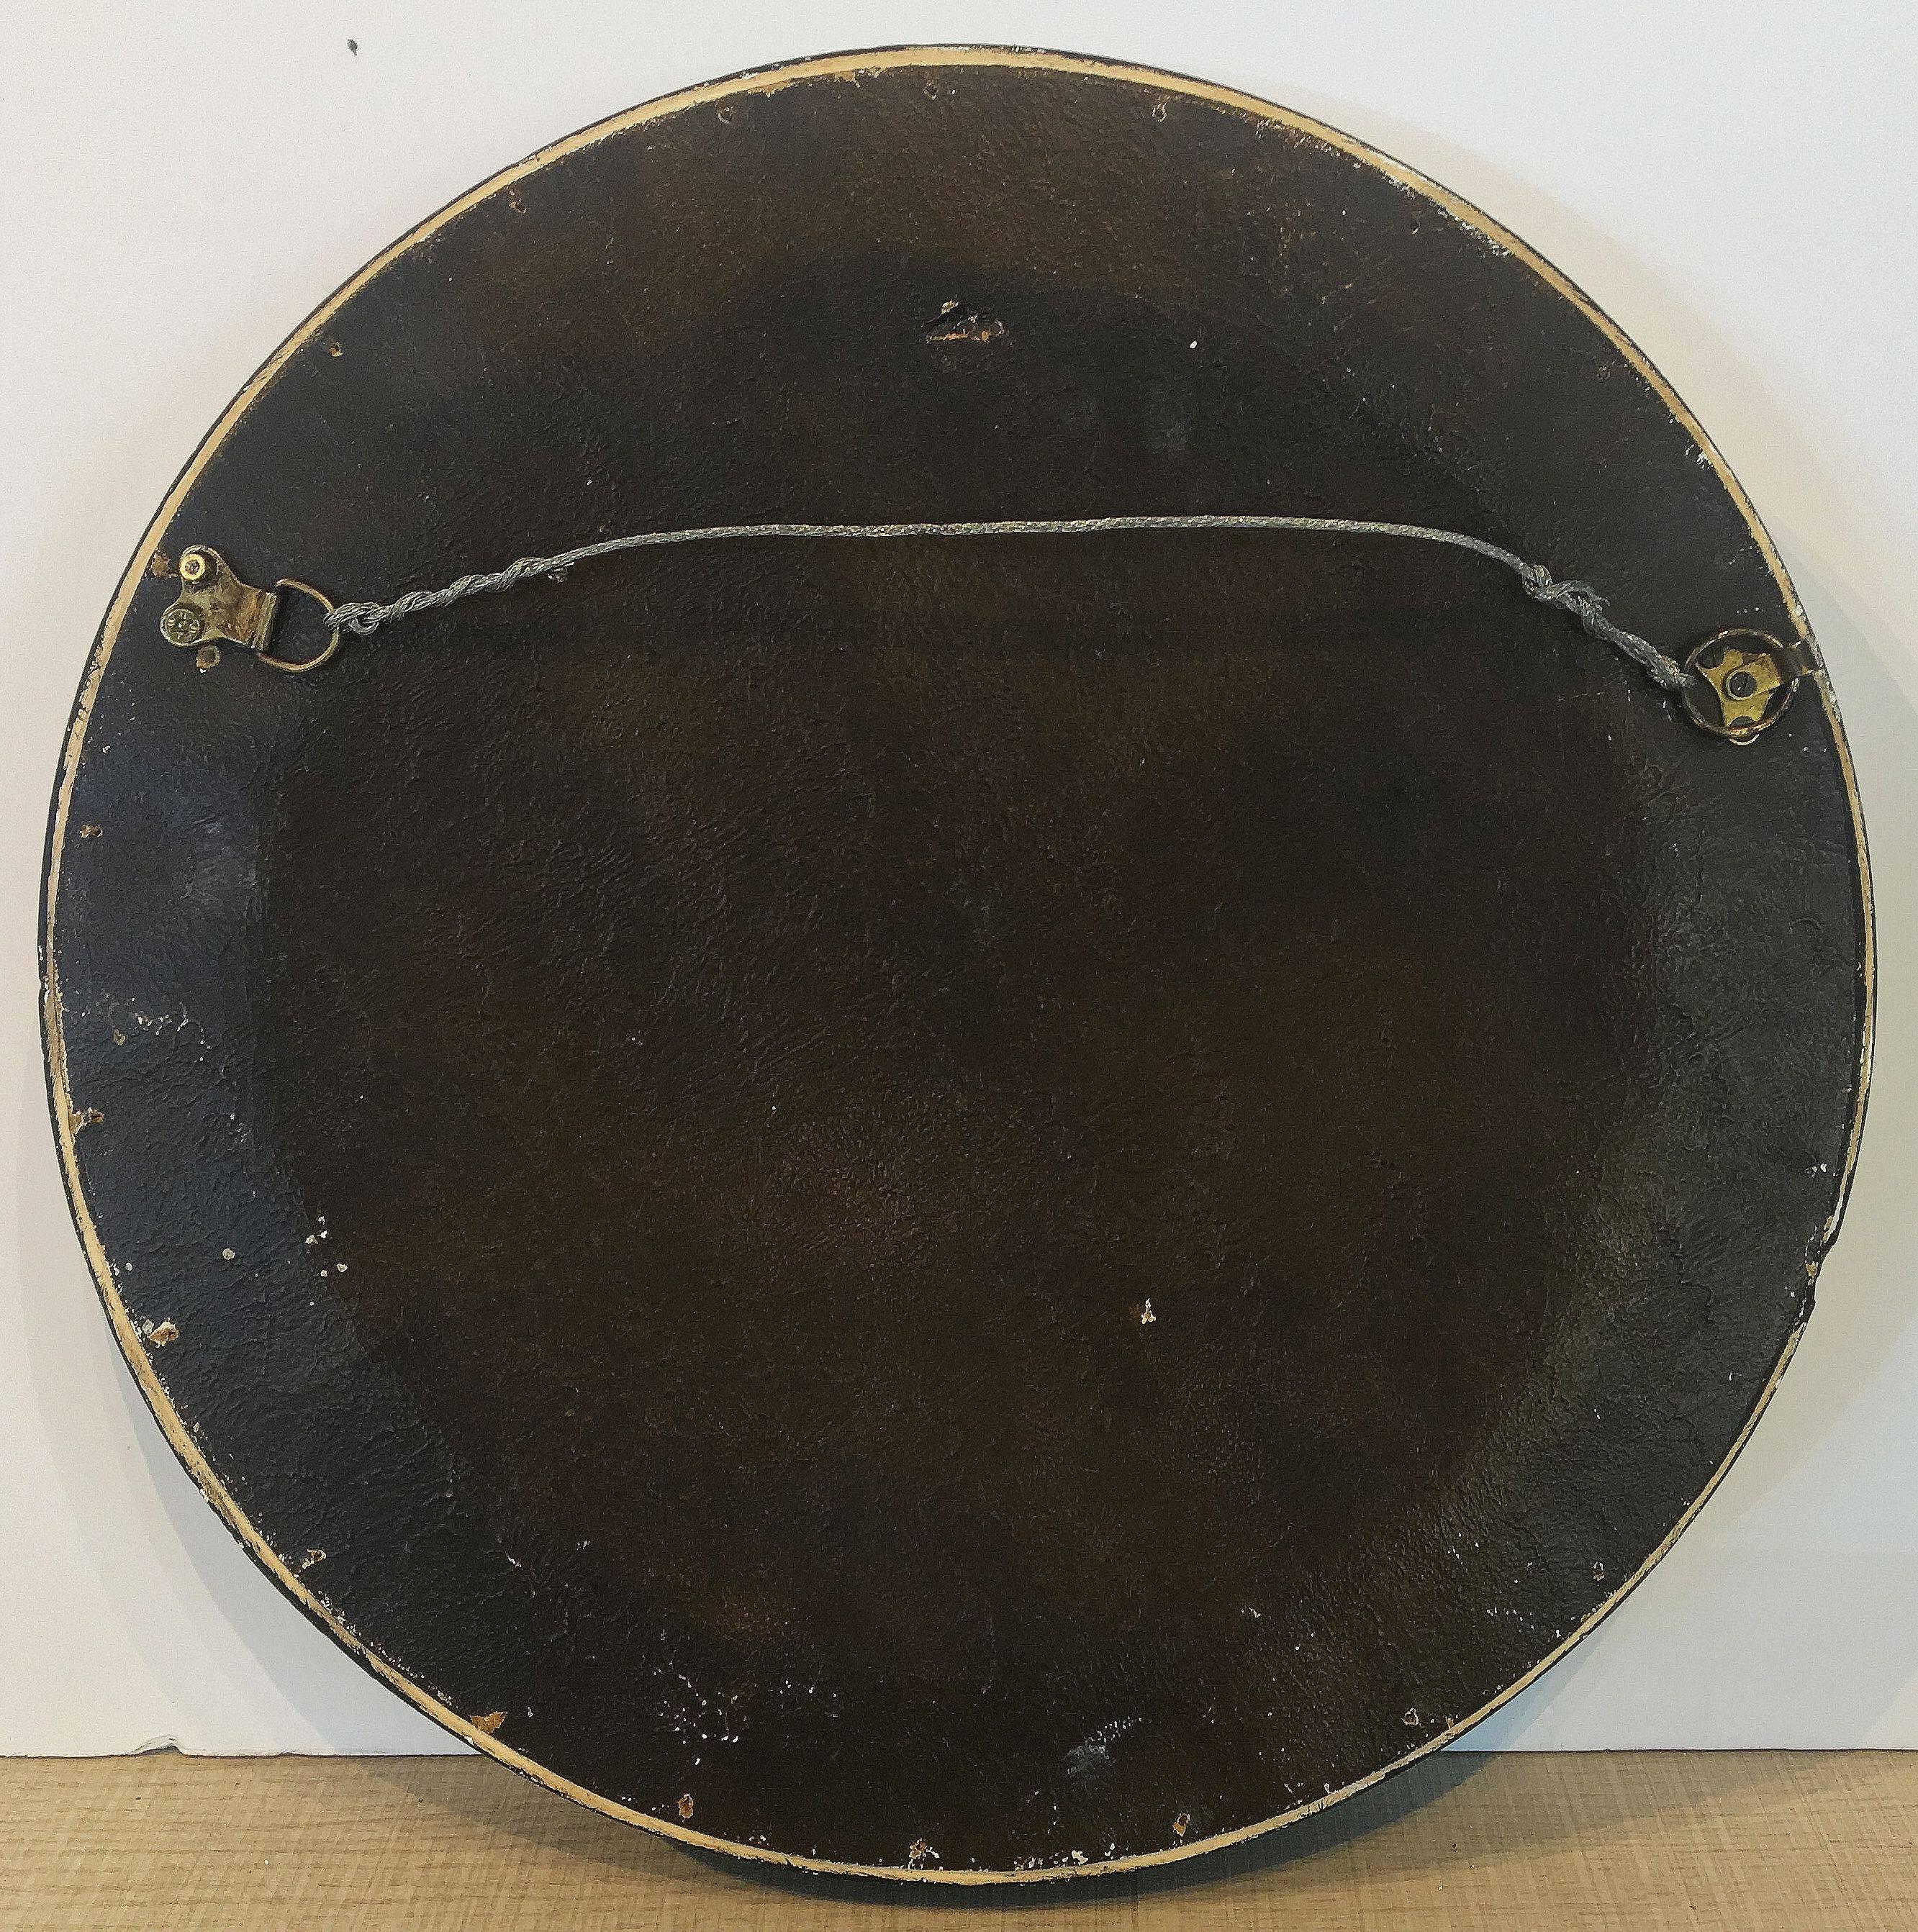 20th Century English Round Ebony Black and Gold Framed Convex Mirror (Diameter 16 1/2)